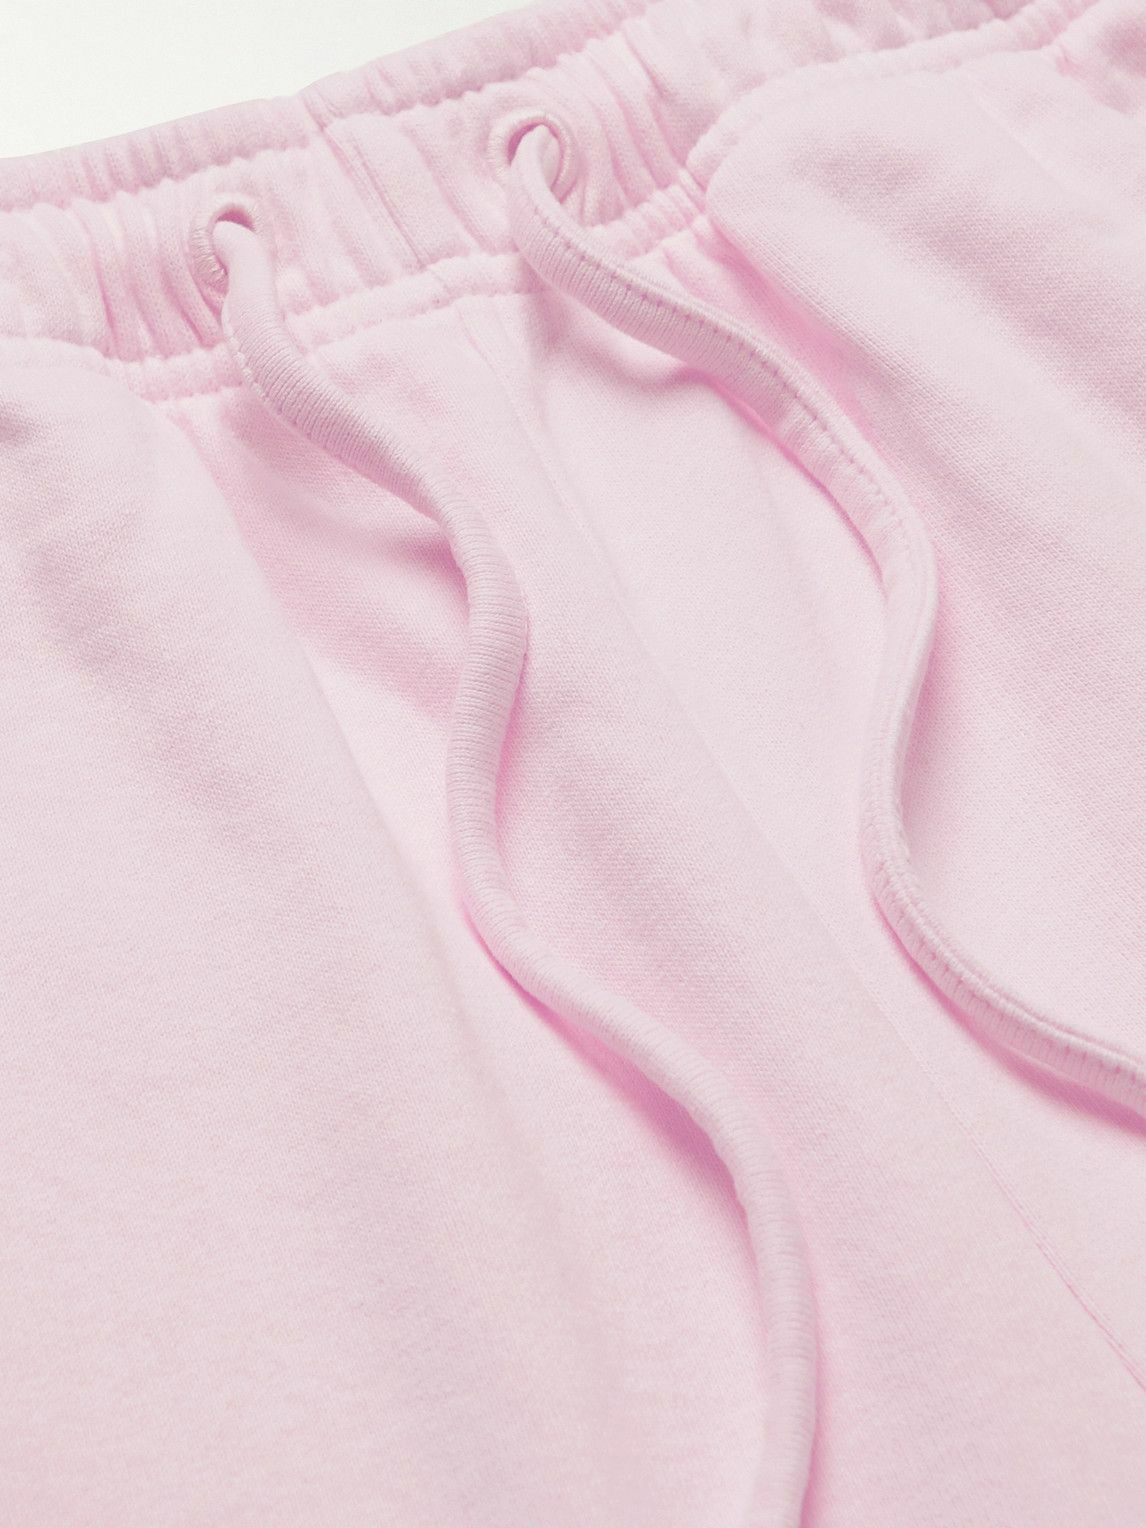 Acne Studios - Cotton sweatpants - Bright pink